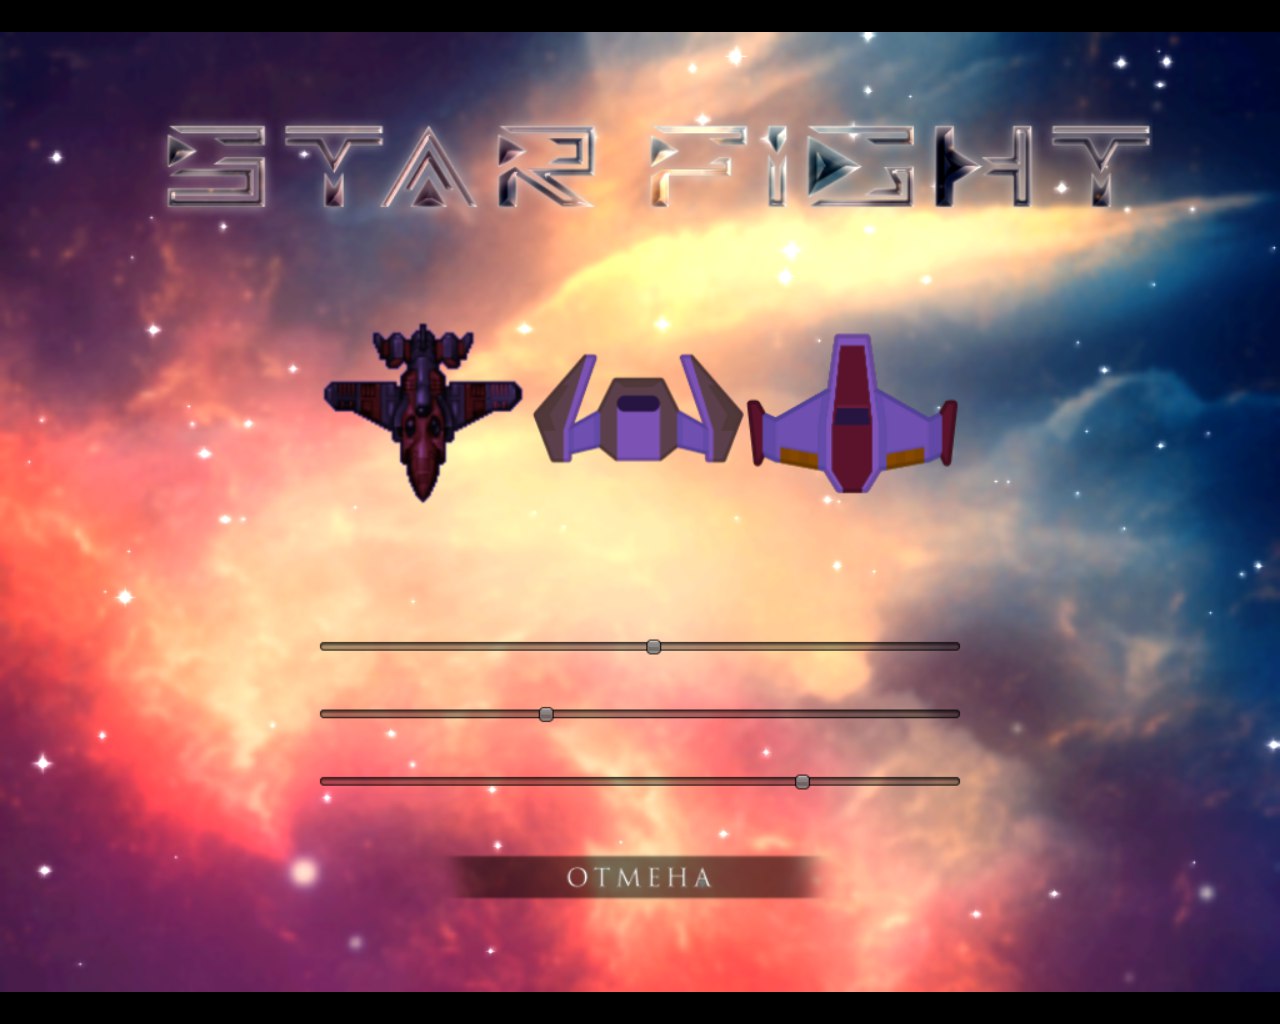 Star Fight Steam CD Key